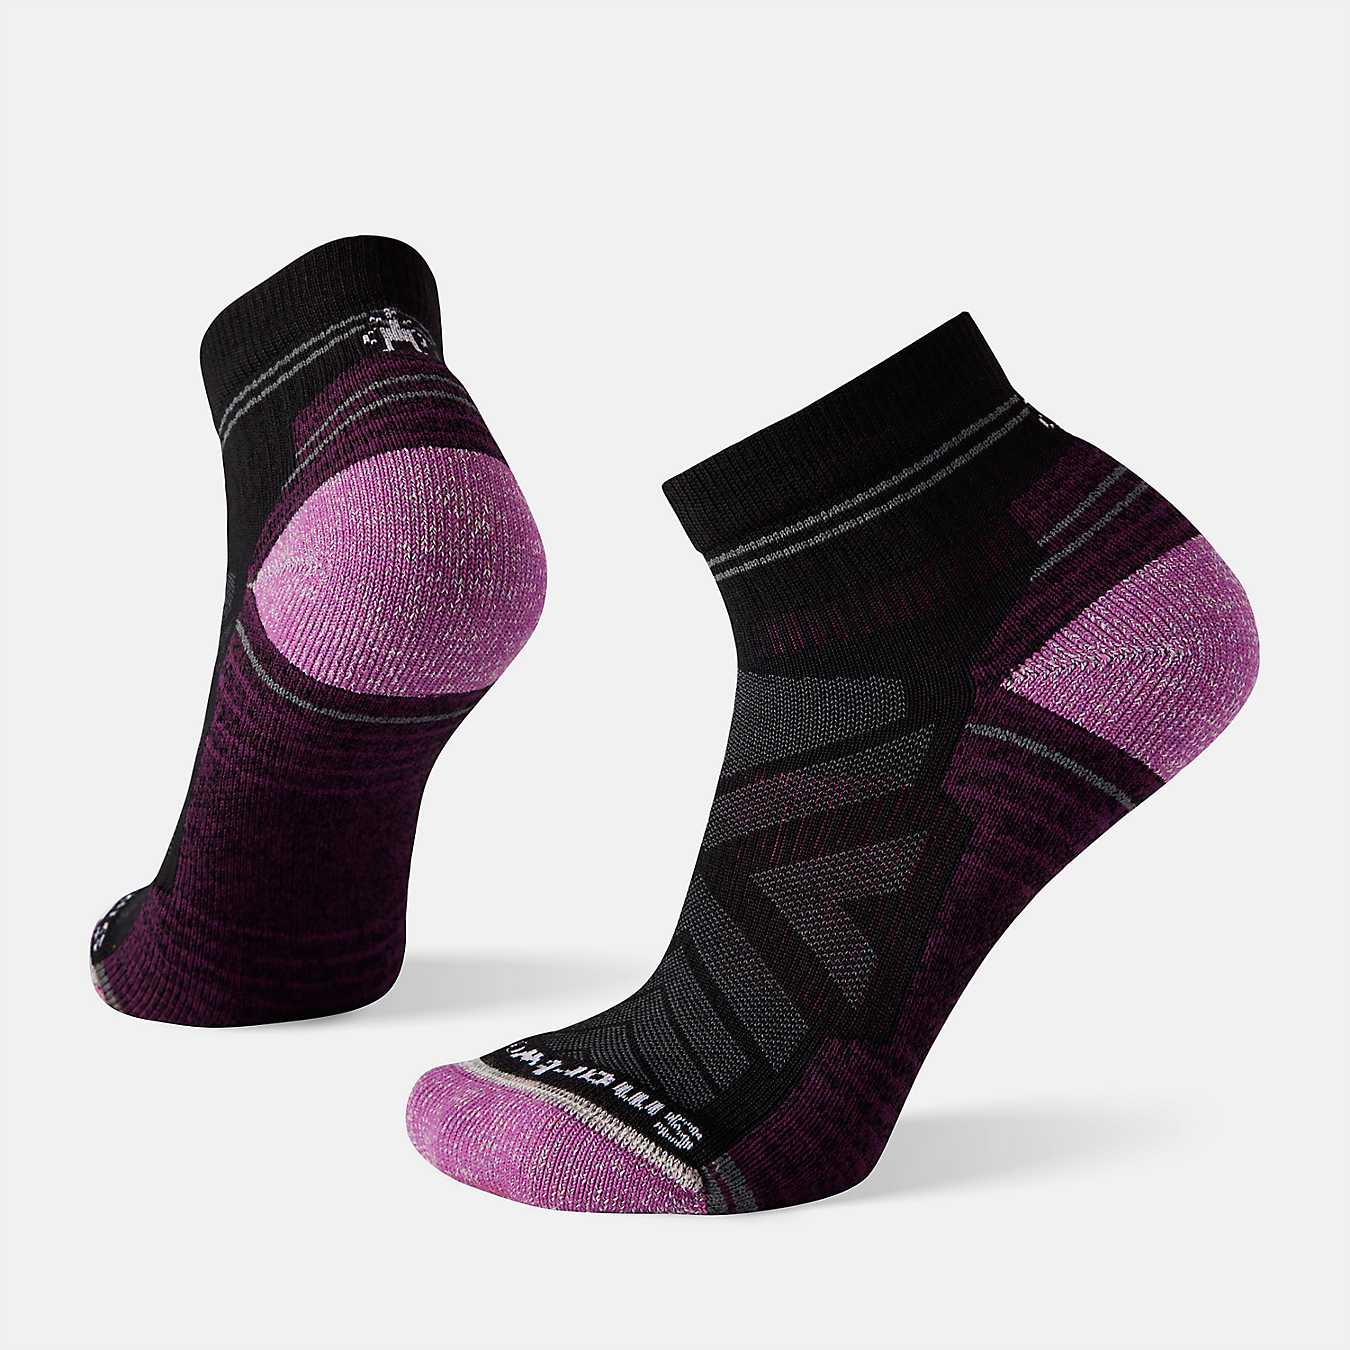 Smartwool: Merino Wool Outdoor Clothing & Socks